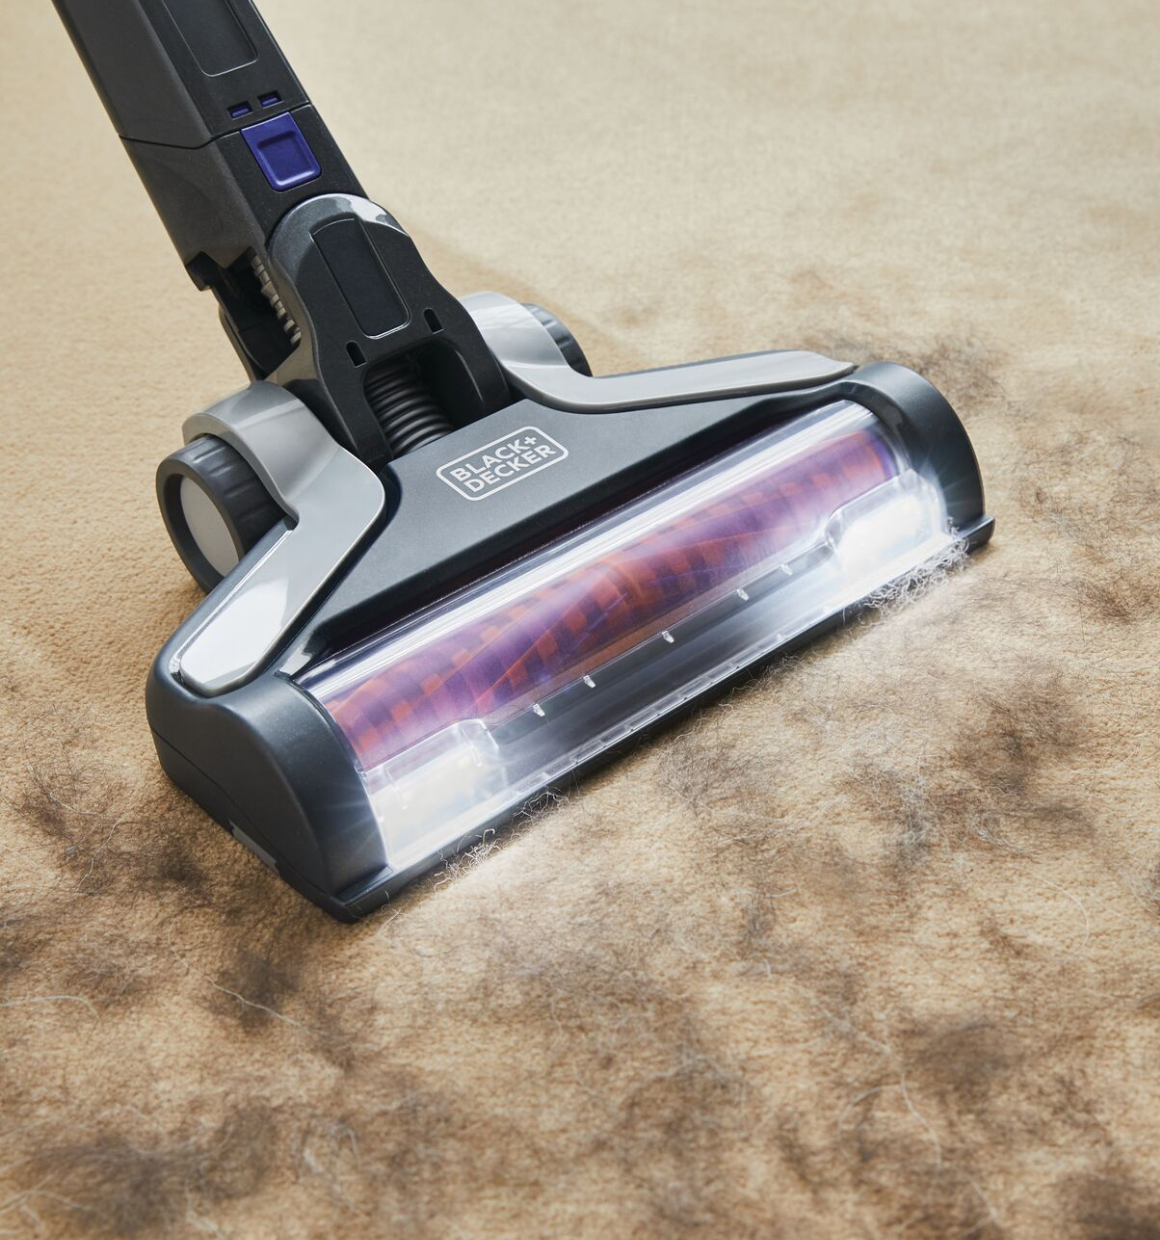 Black+decker PowerSeries Extreme Pet Cordless Stick Vacuum Cleaner